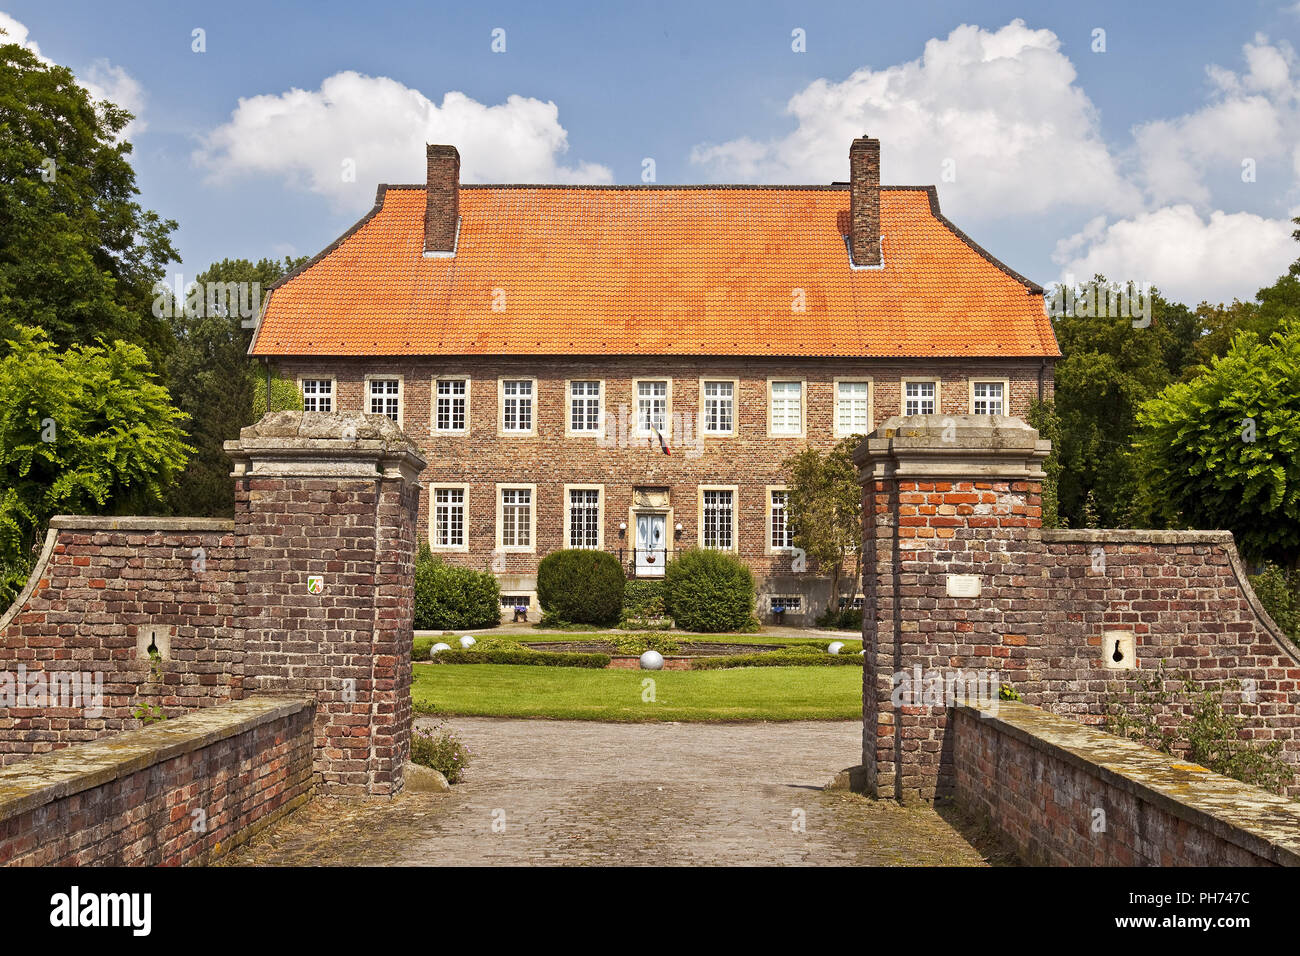 Haus Venne, moated castle, Drensteinfurt, Germany Stock Photo